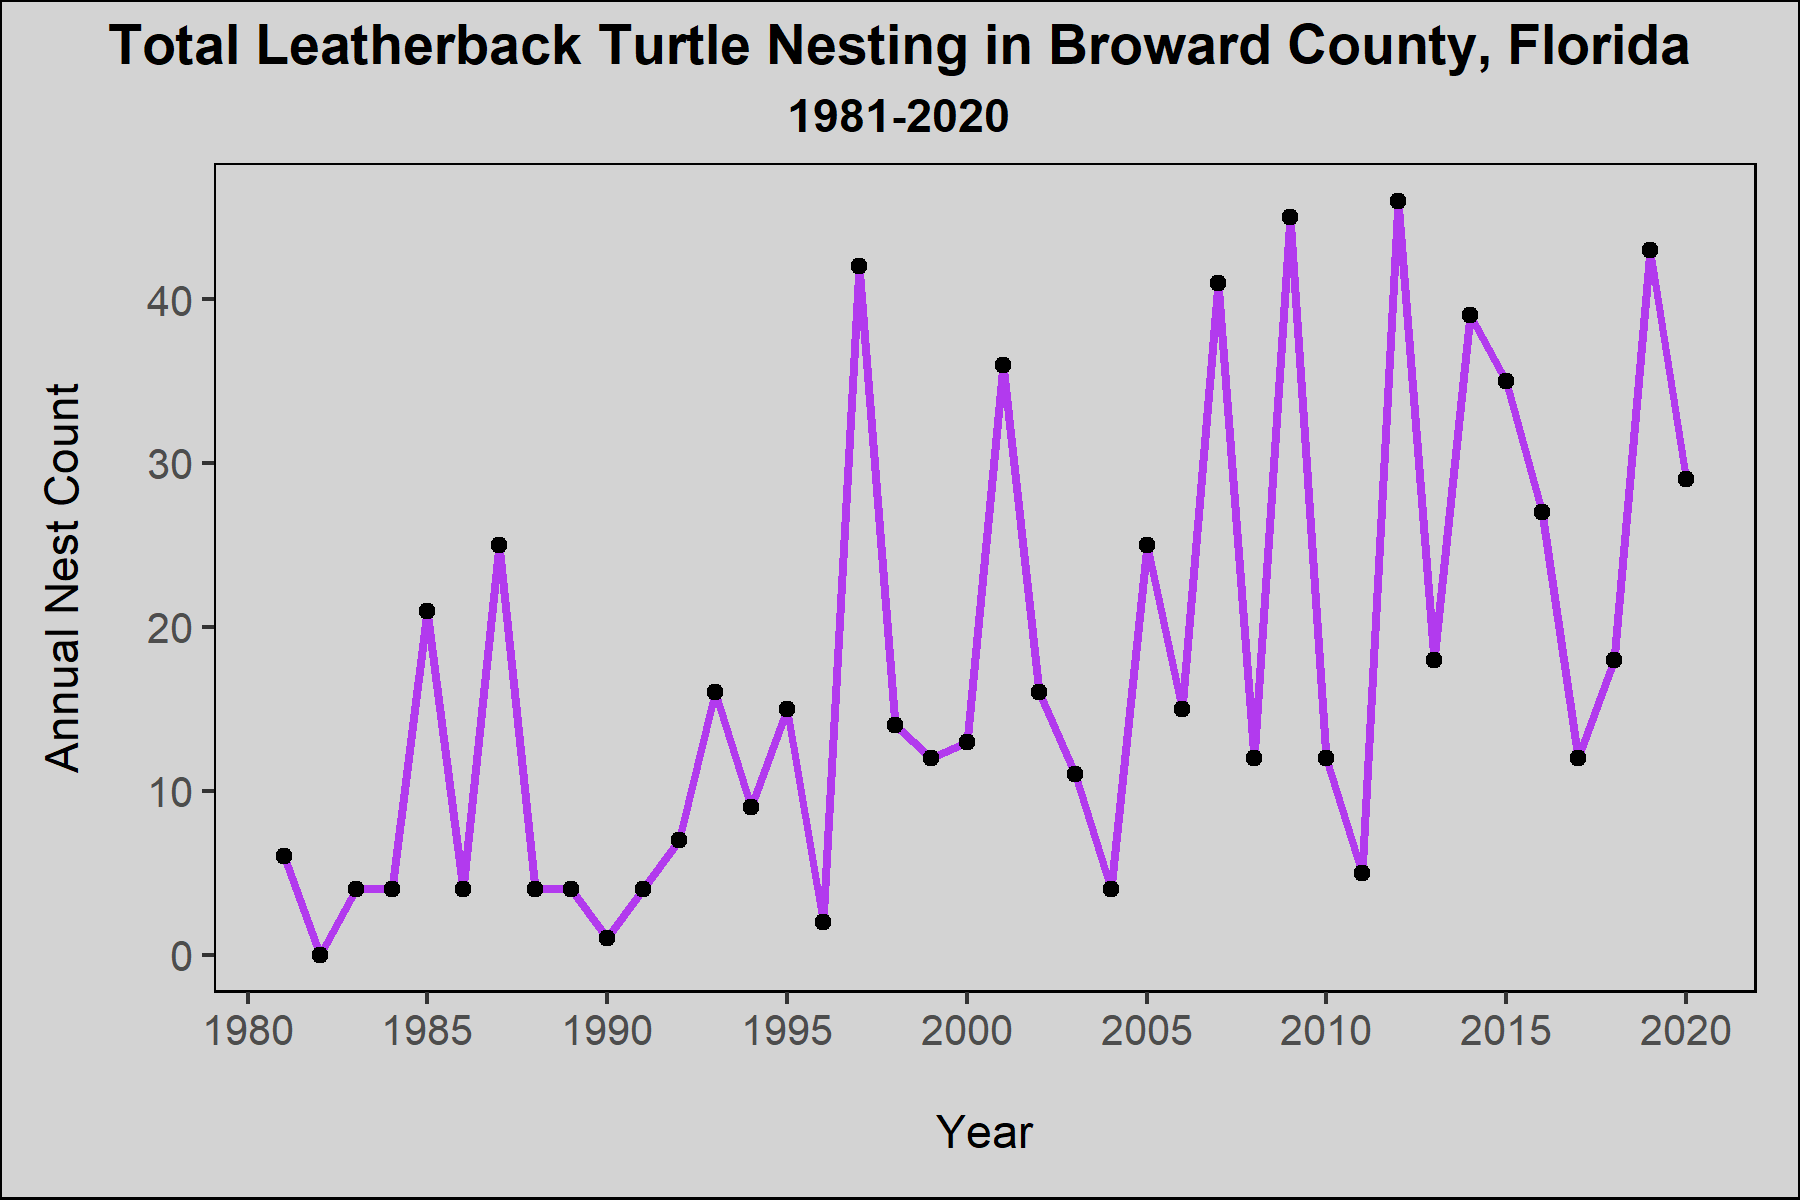 Historic Leatherback Nesting Trends